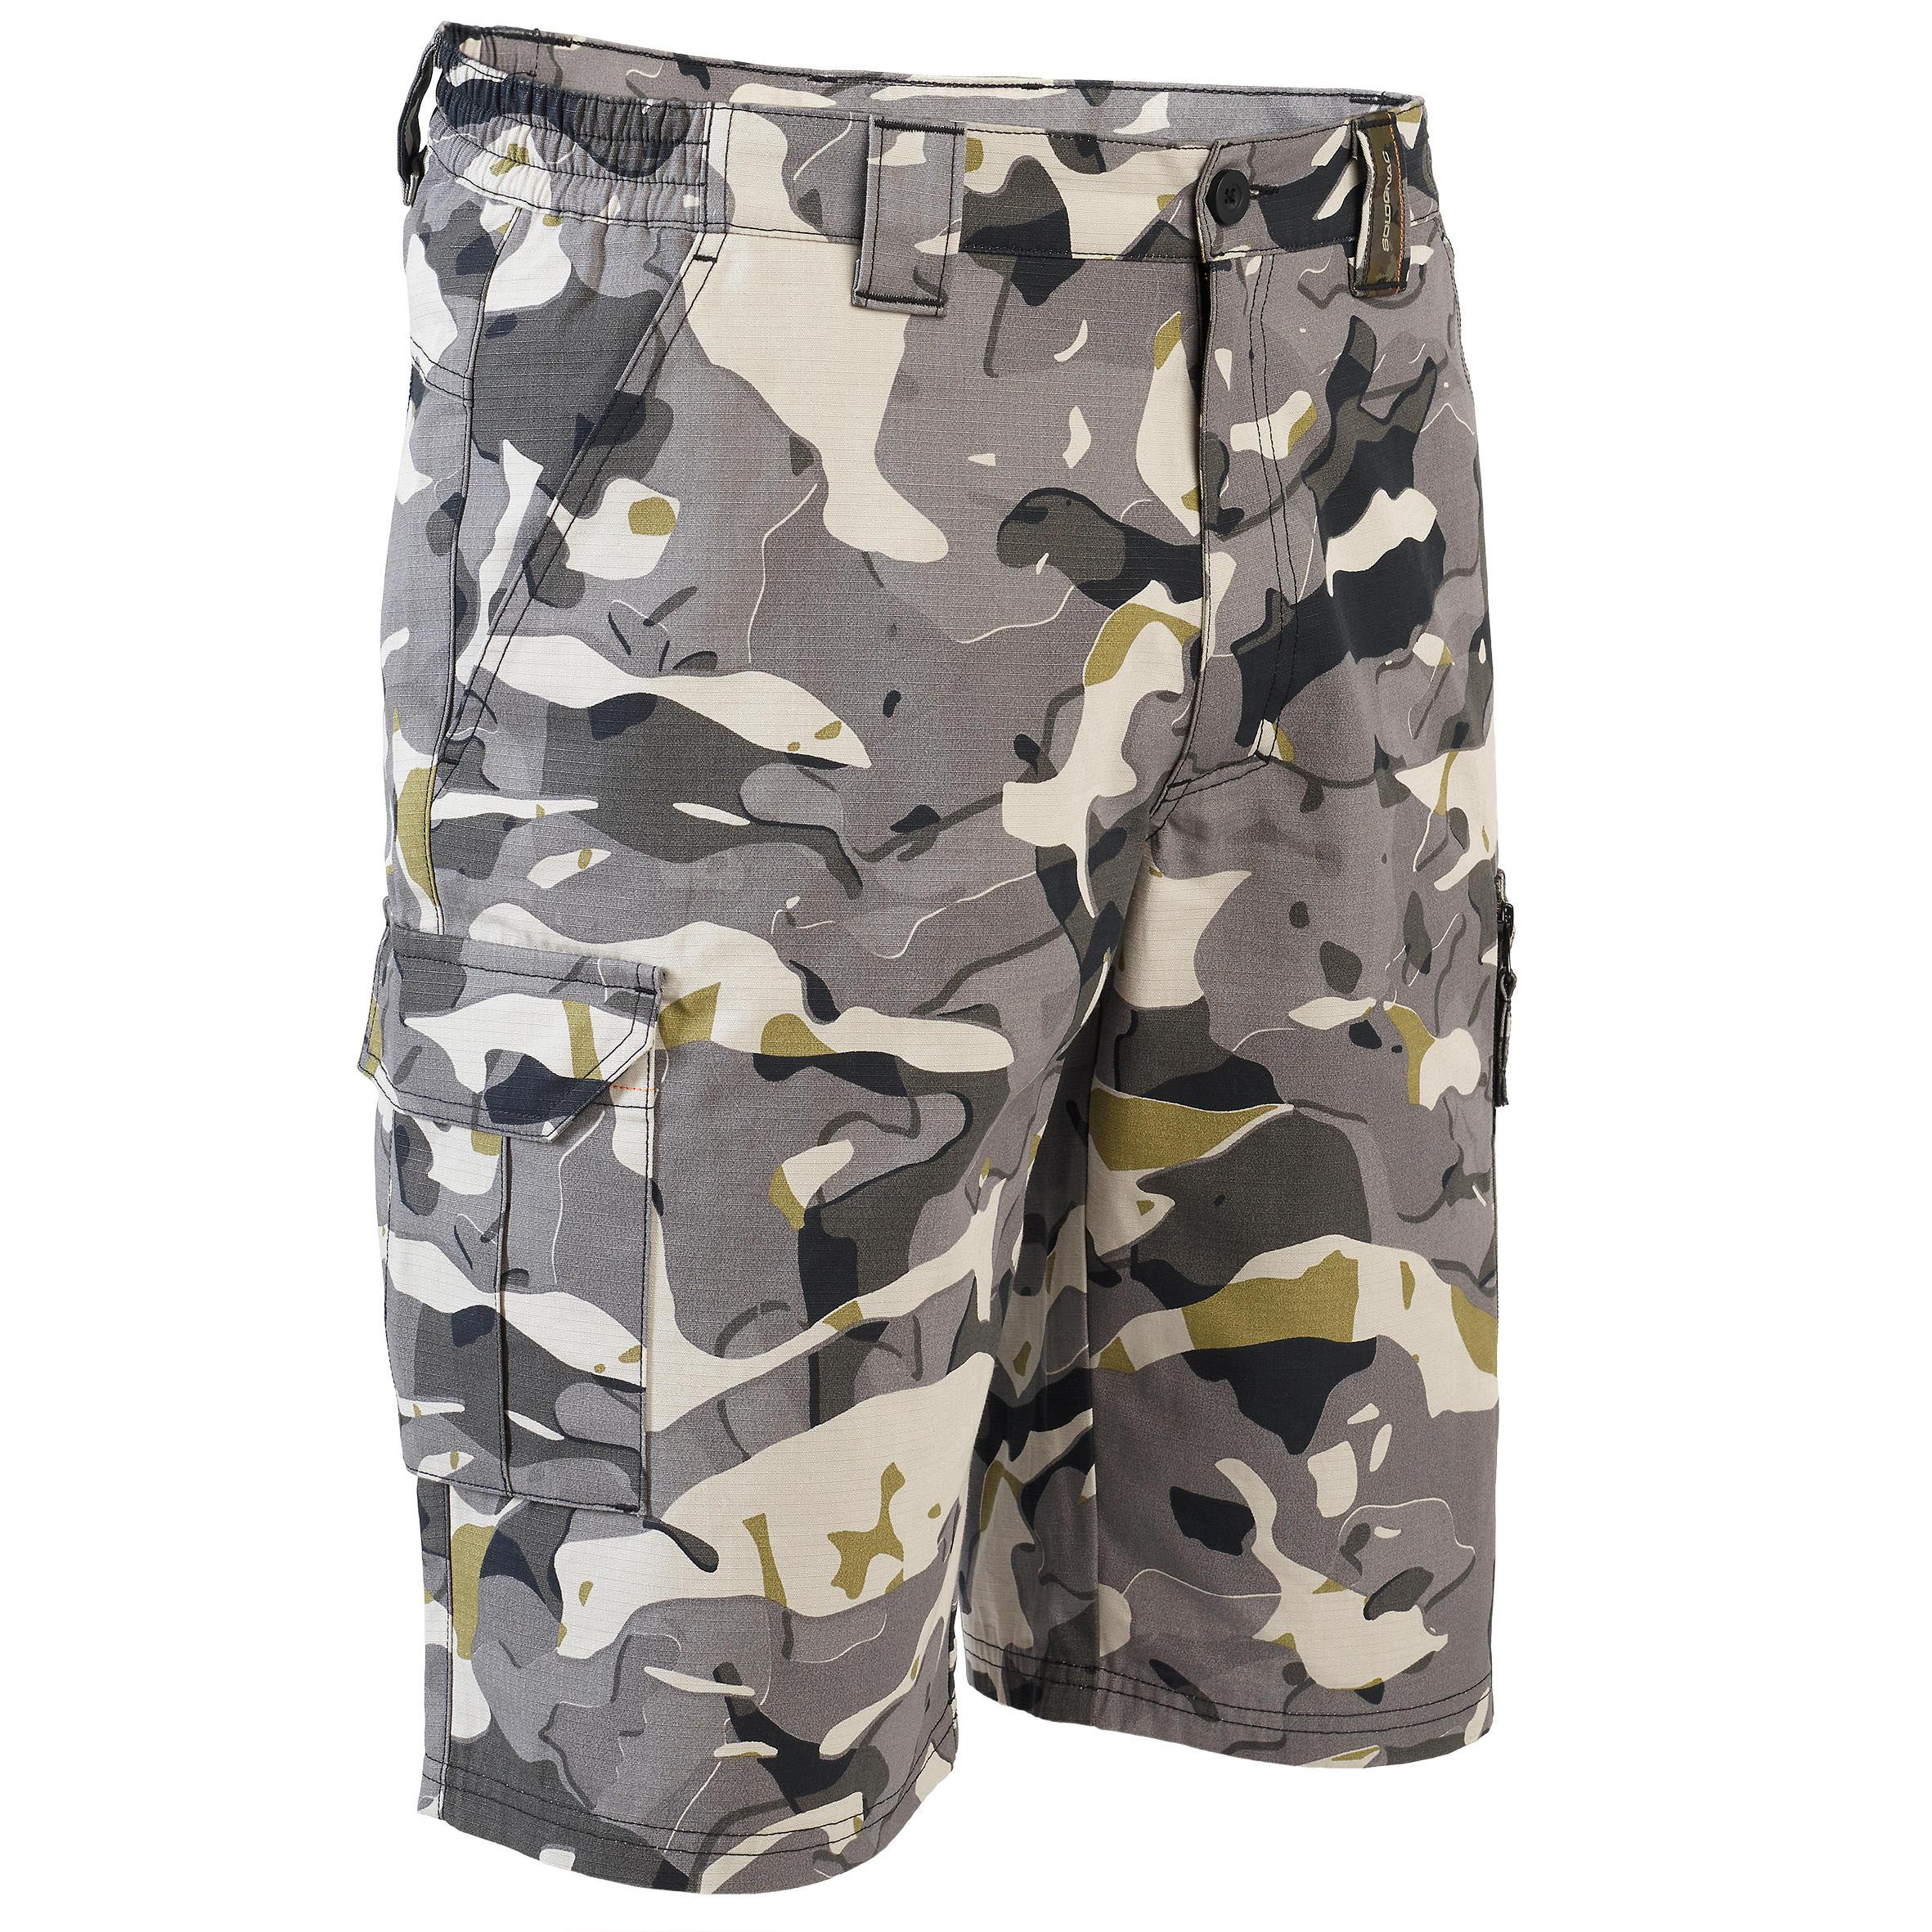 SOLOGNAC Bermuda shorts 500 - Woodland V1 mineral grey LTD camouflage